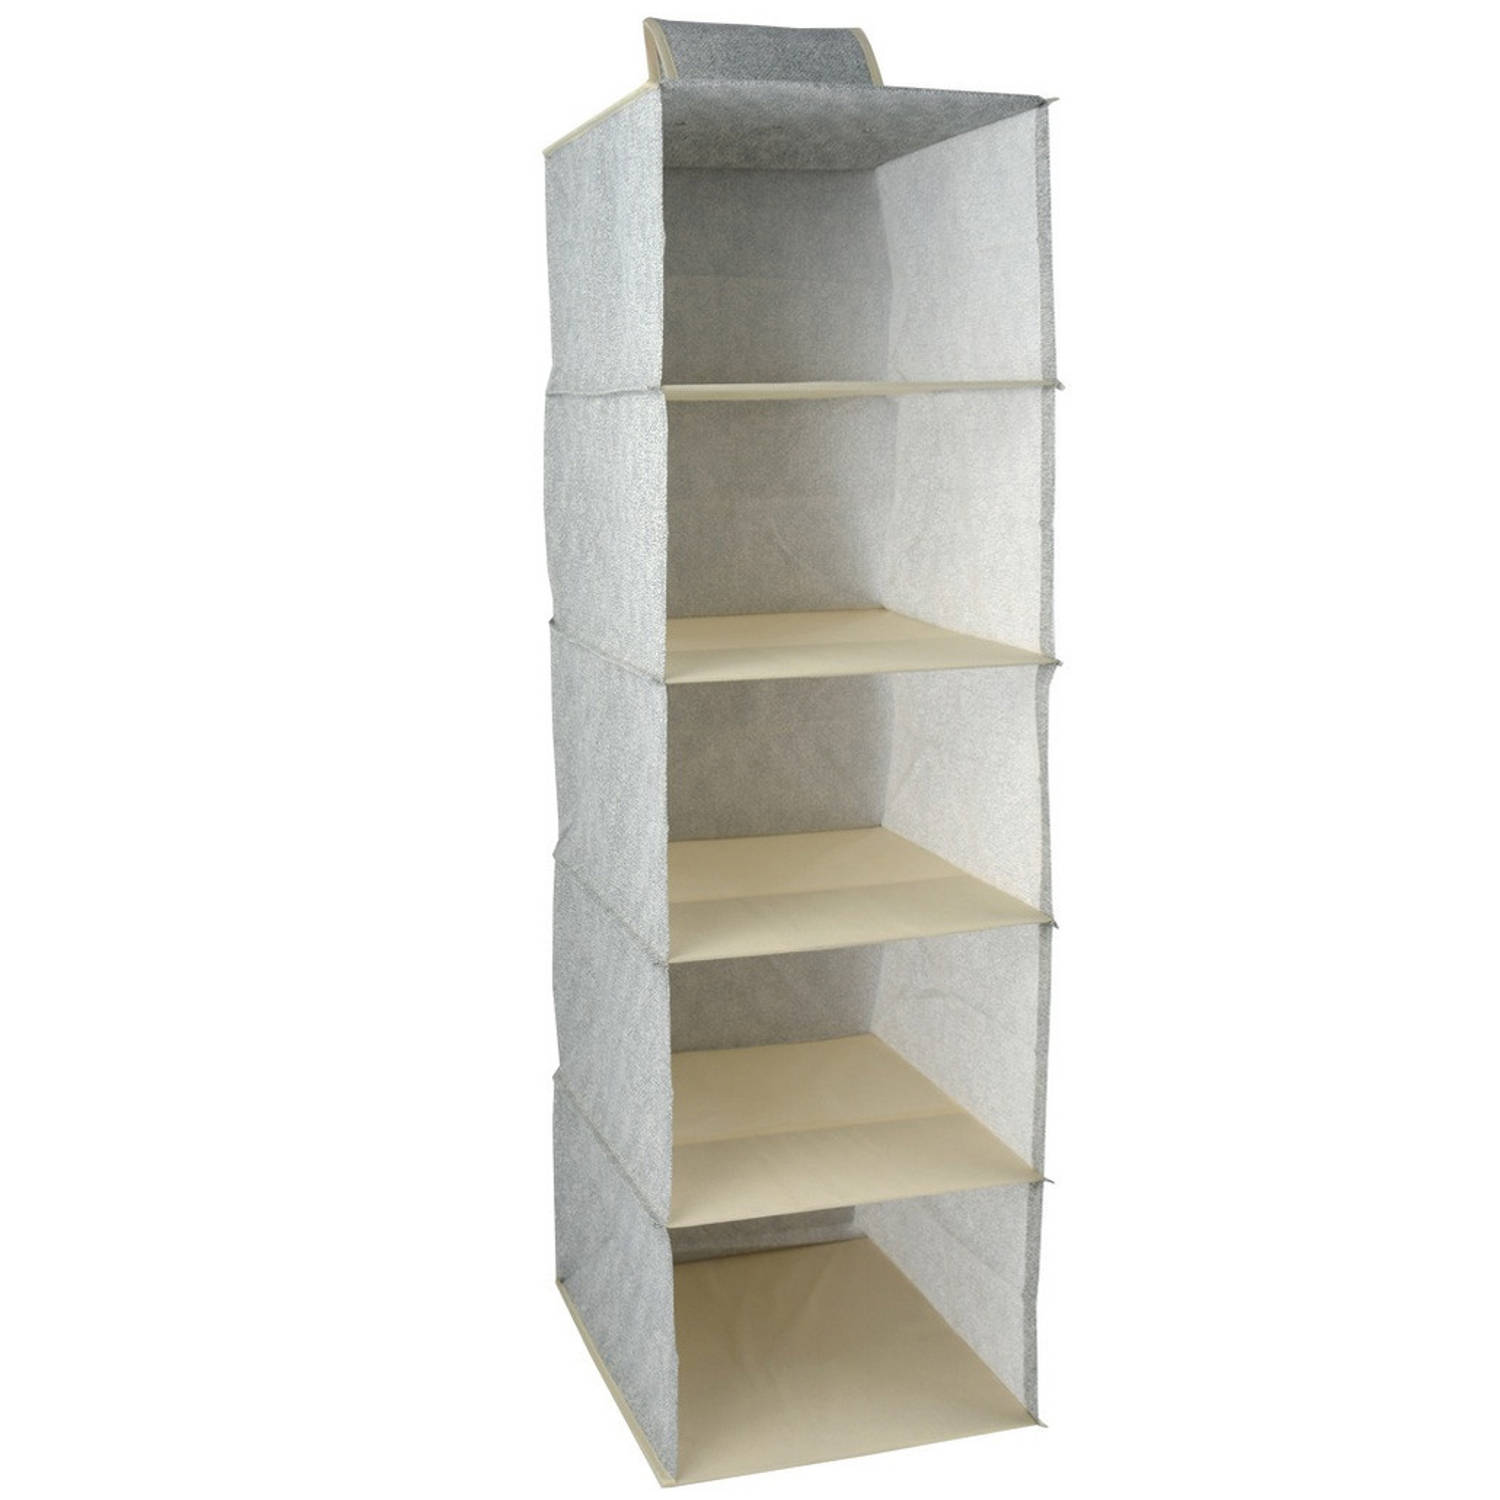 MSV kast organizer - hangend - 5 vakken - 28 x 28 x 95 cm - grijs